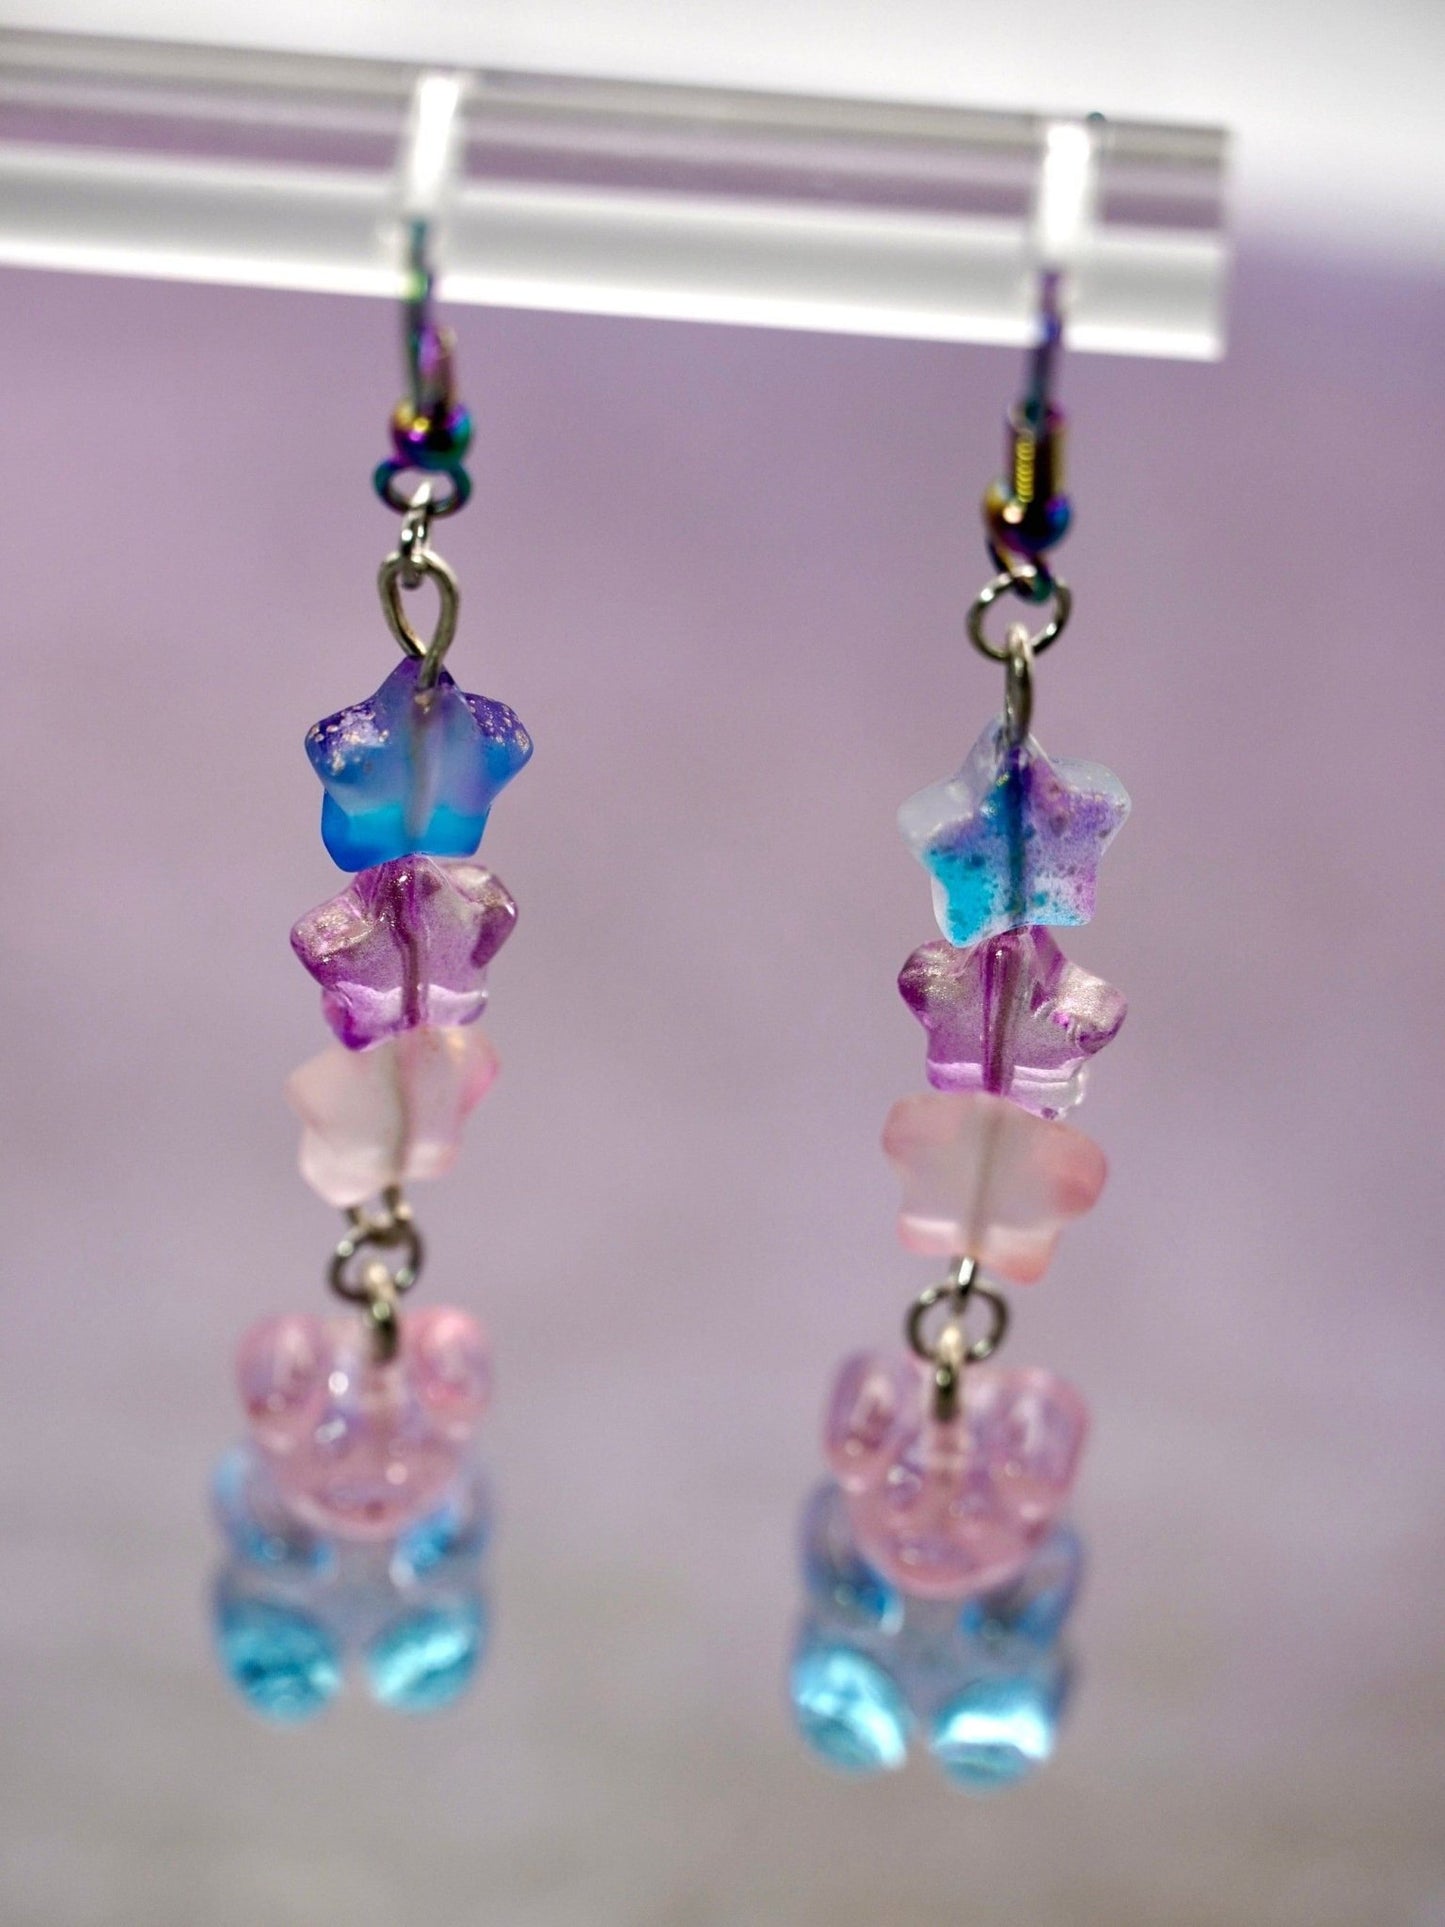 Gummy Bear Earrings with Czech Glass Stars, Kawaii Gummy Bear Earrings, Cute Gummy Bear Earrings, Gummy Bear Earrings, Harajuku Earrings - Dekowaii Jewelry Company